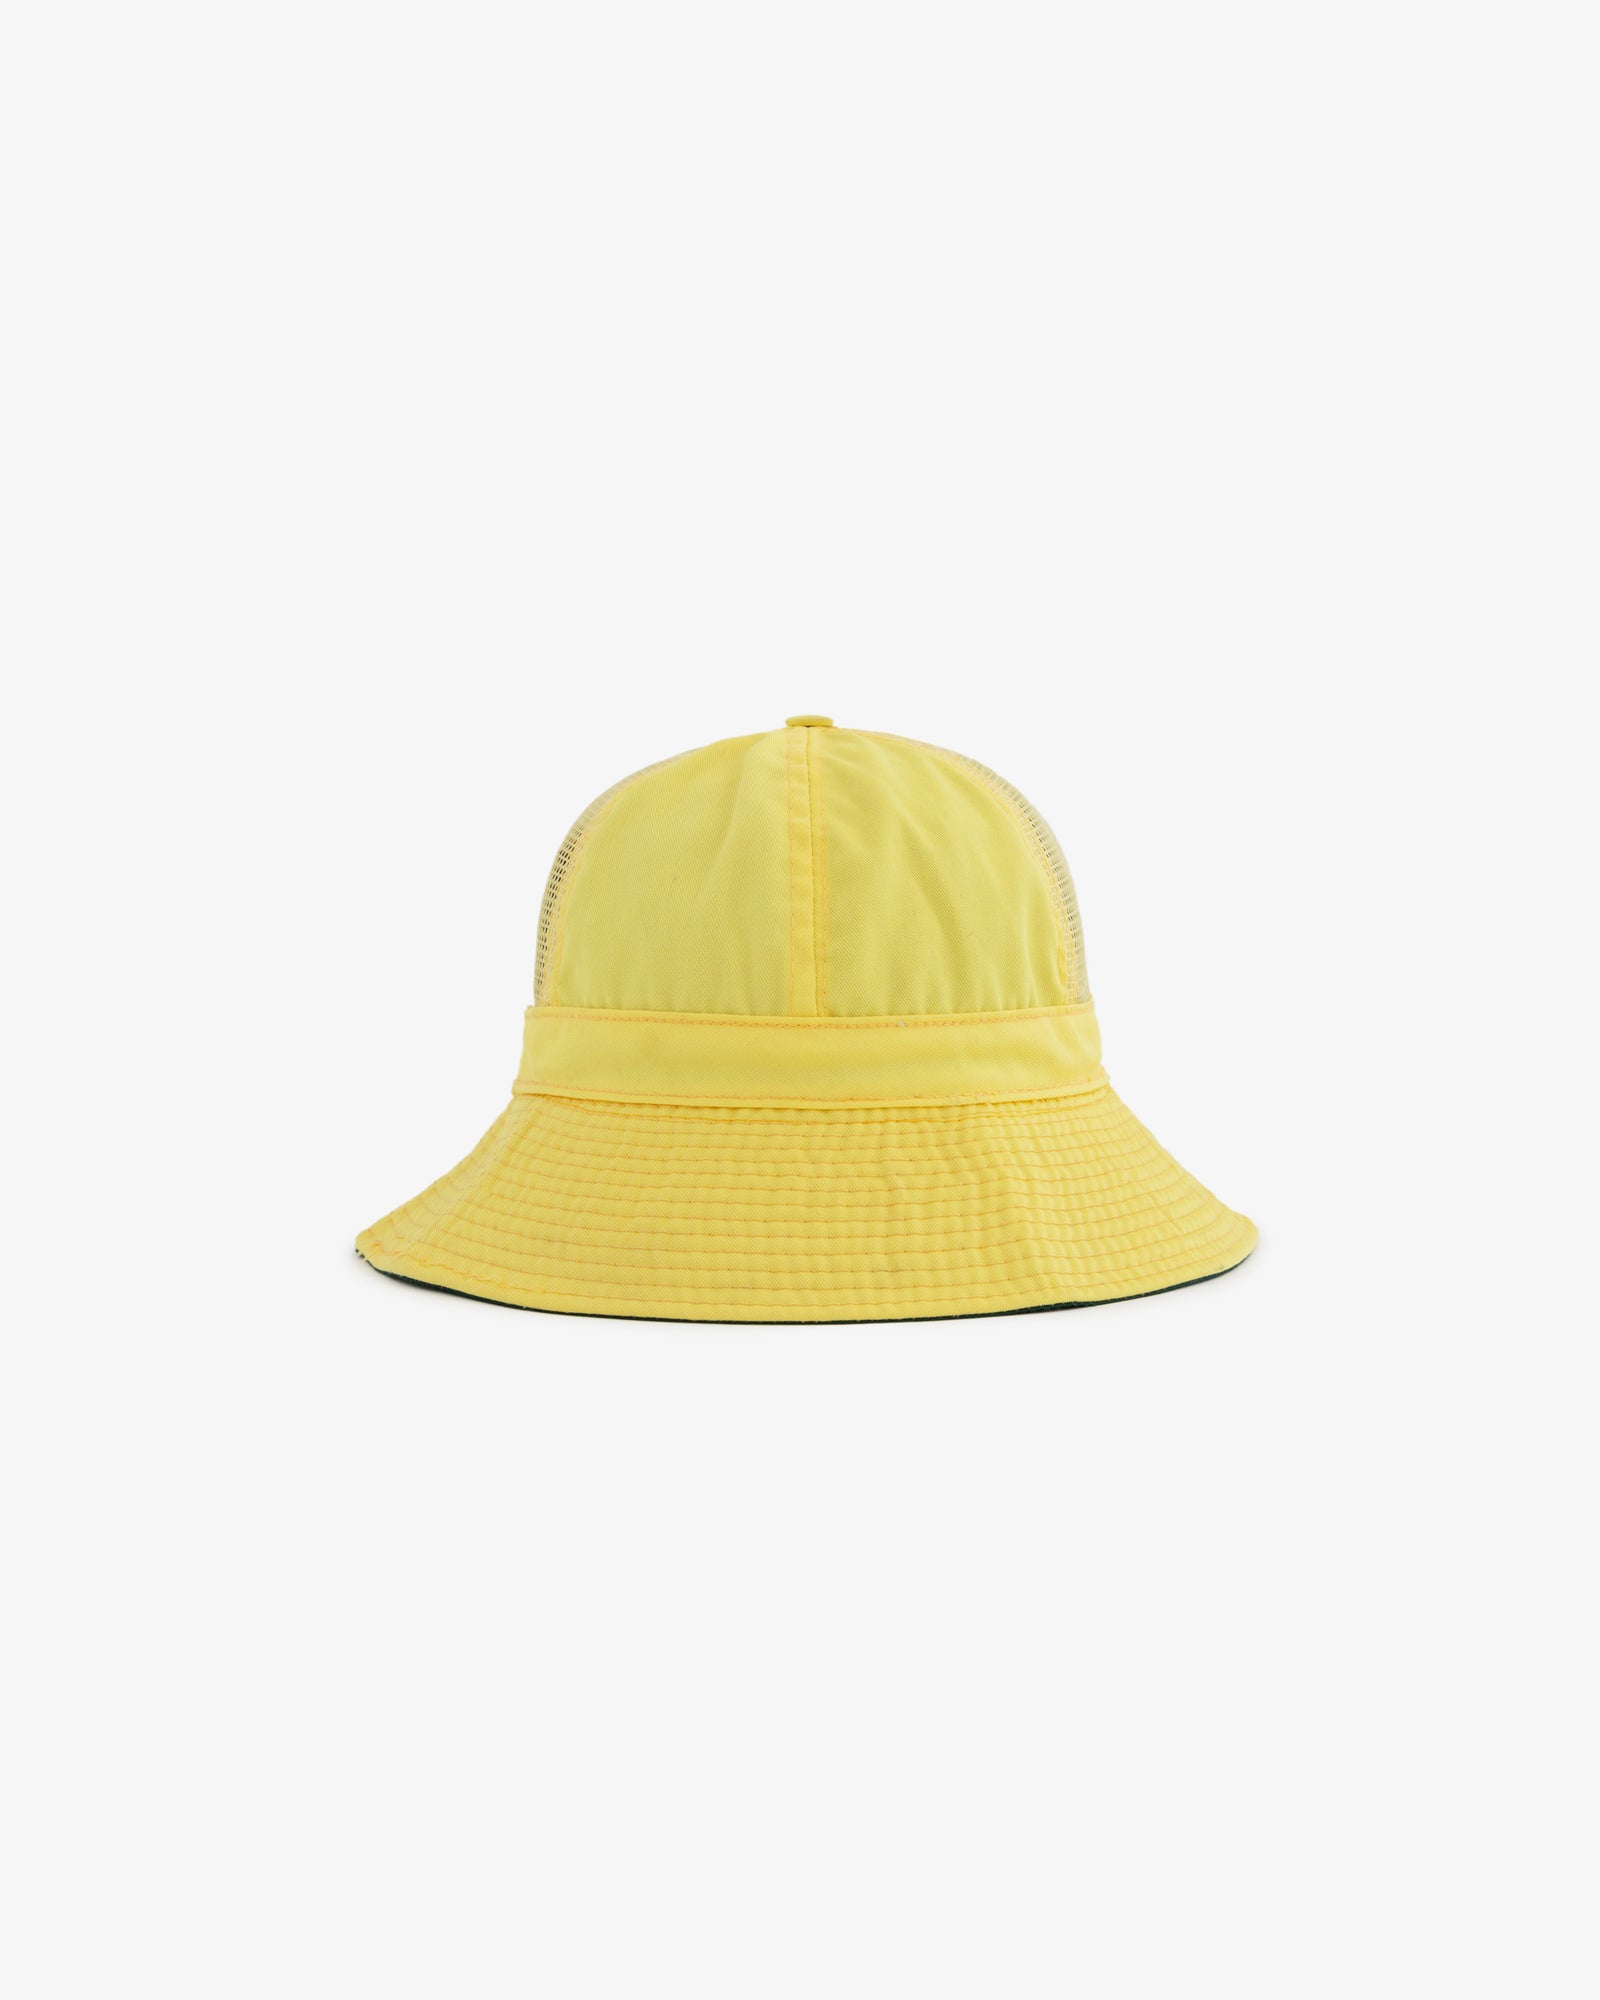 AIME LEON DORE 38-GS Nylon Bucket Hat